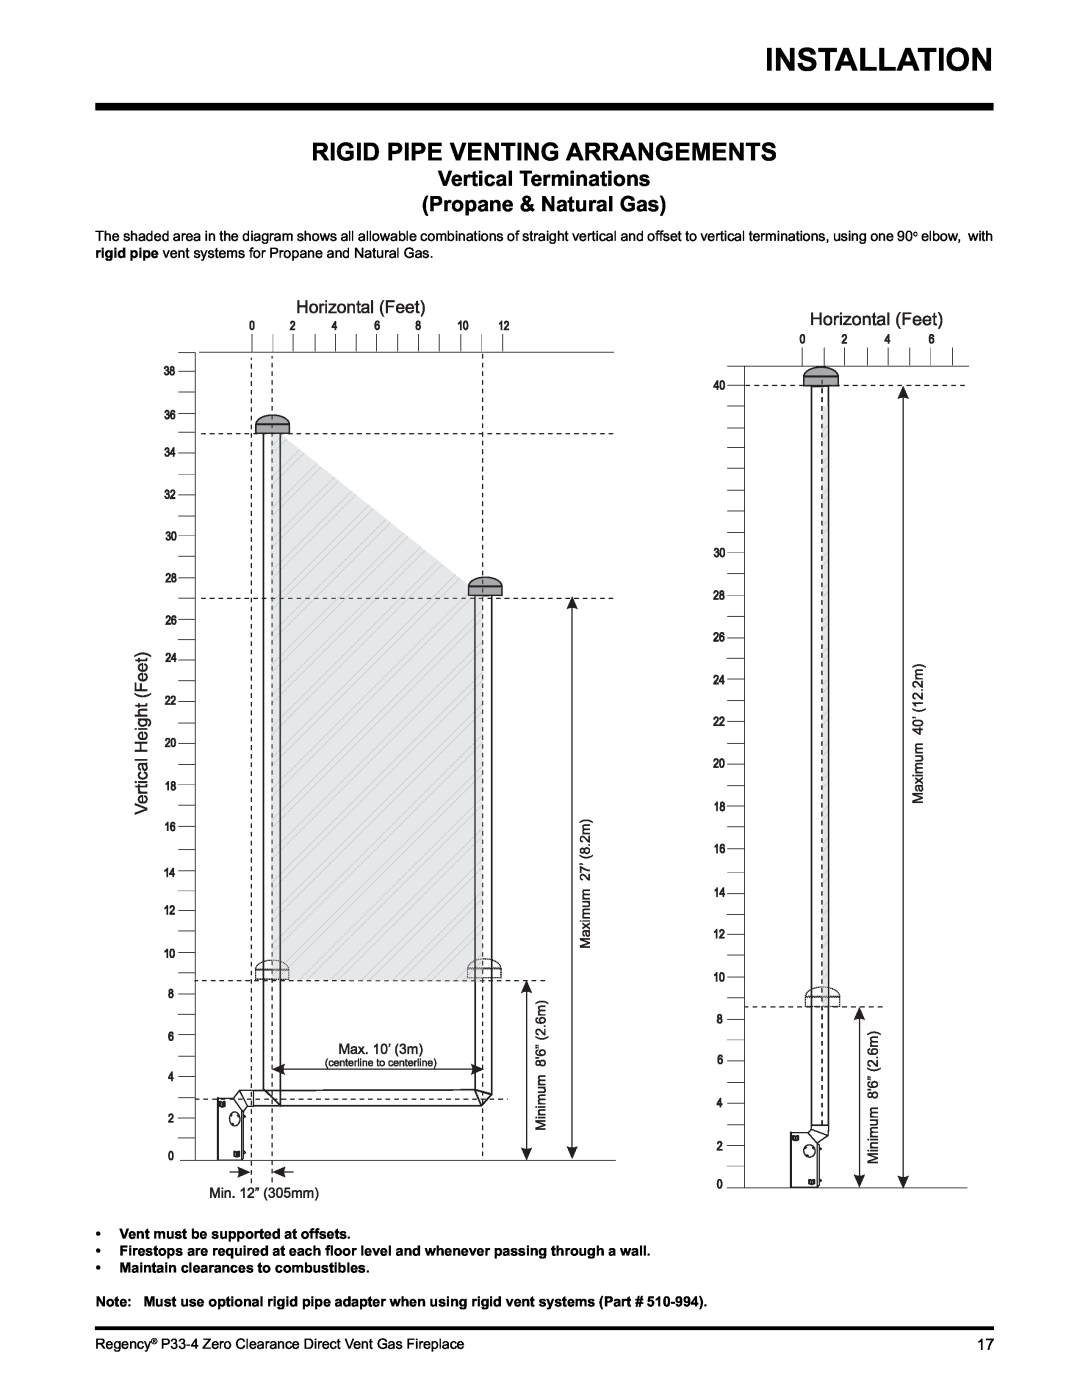 Regency P33-LP4 Installation, Rigid Pipe Venting Arrangements, Vertical Terminations Propane & Natural Gas 